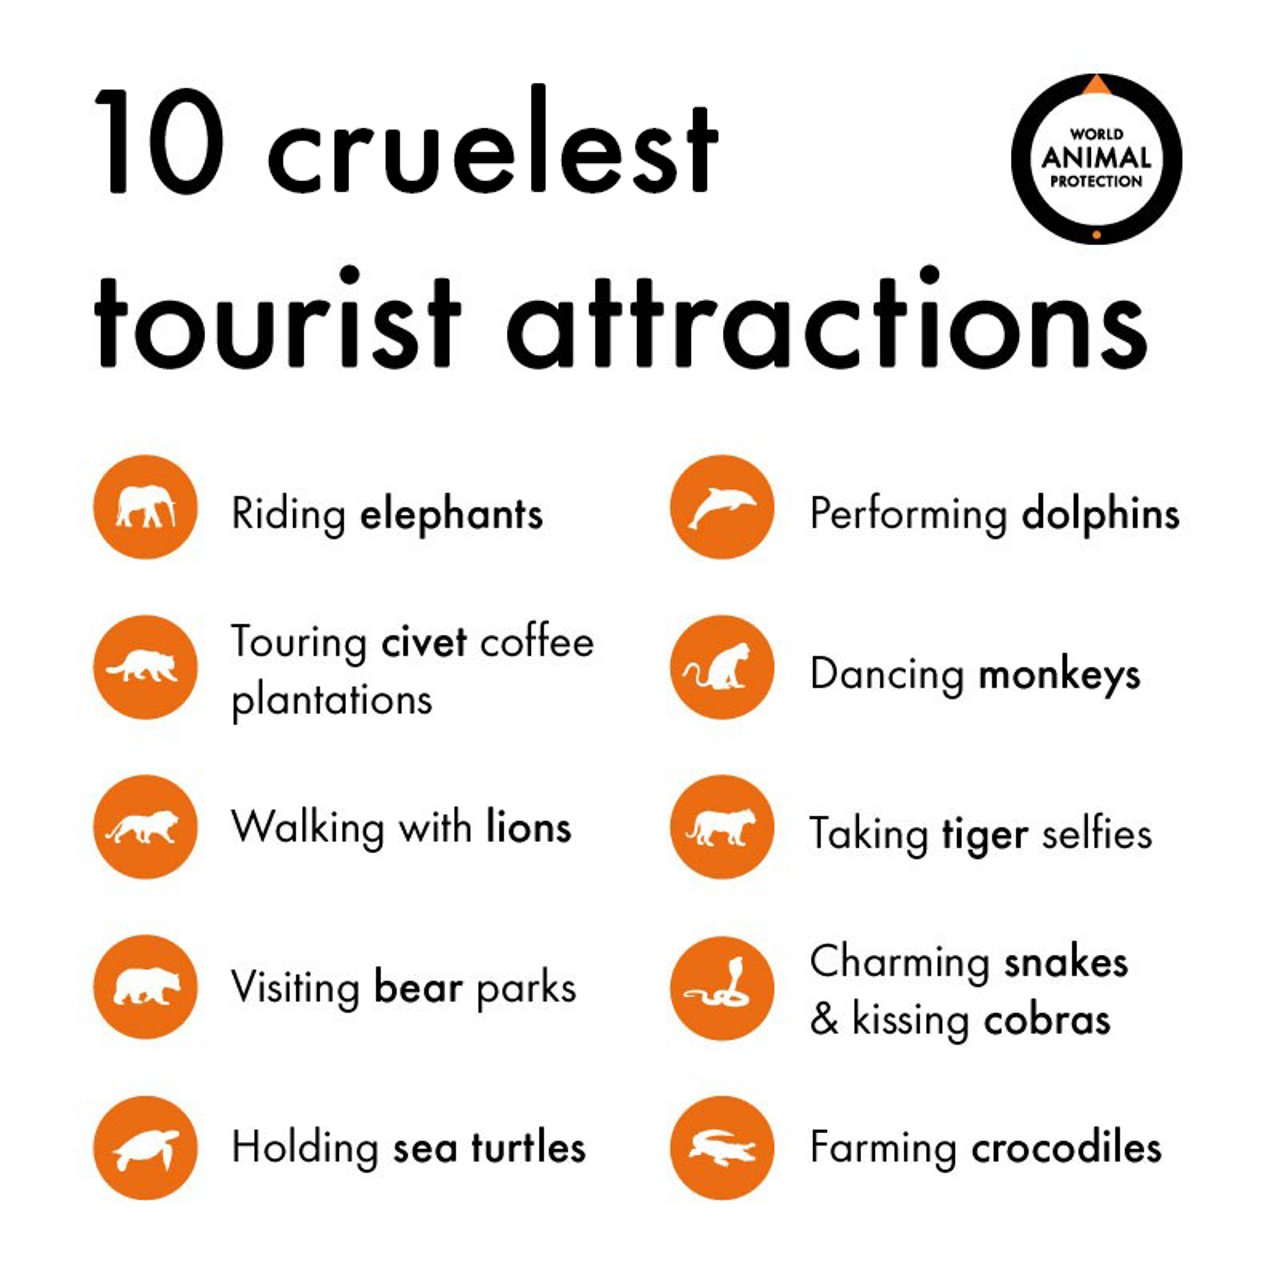 A list of 10 cruel tourist attractions that involve animals.